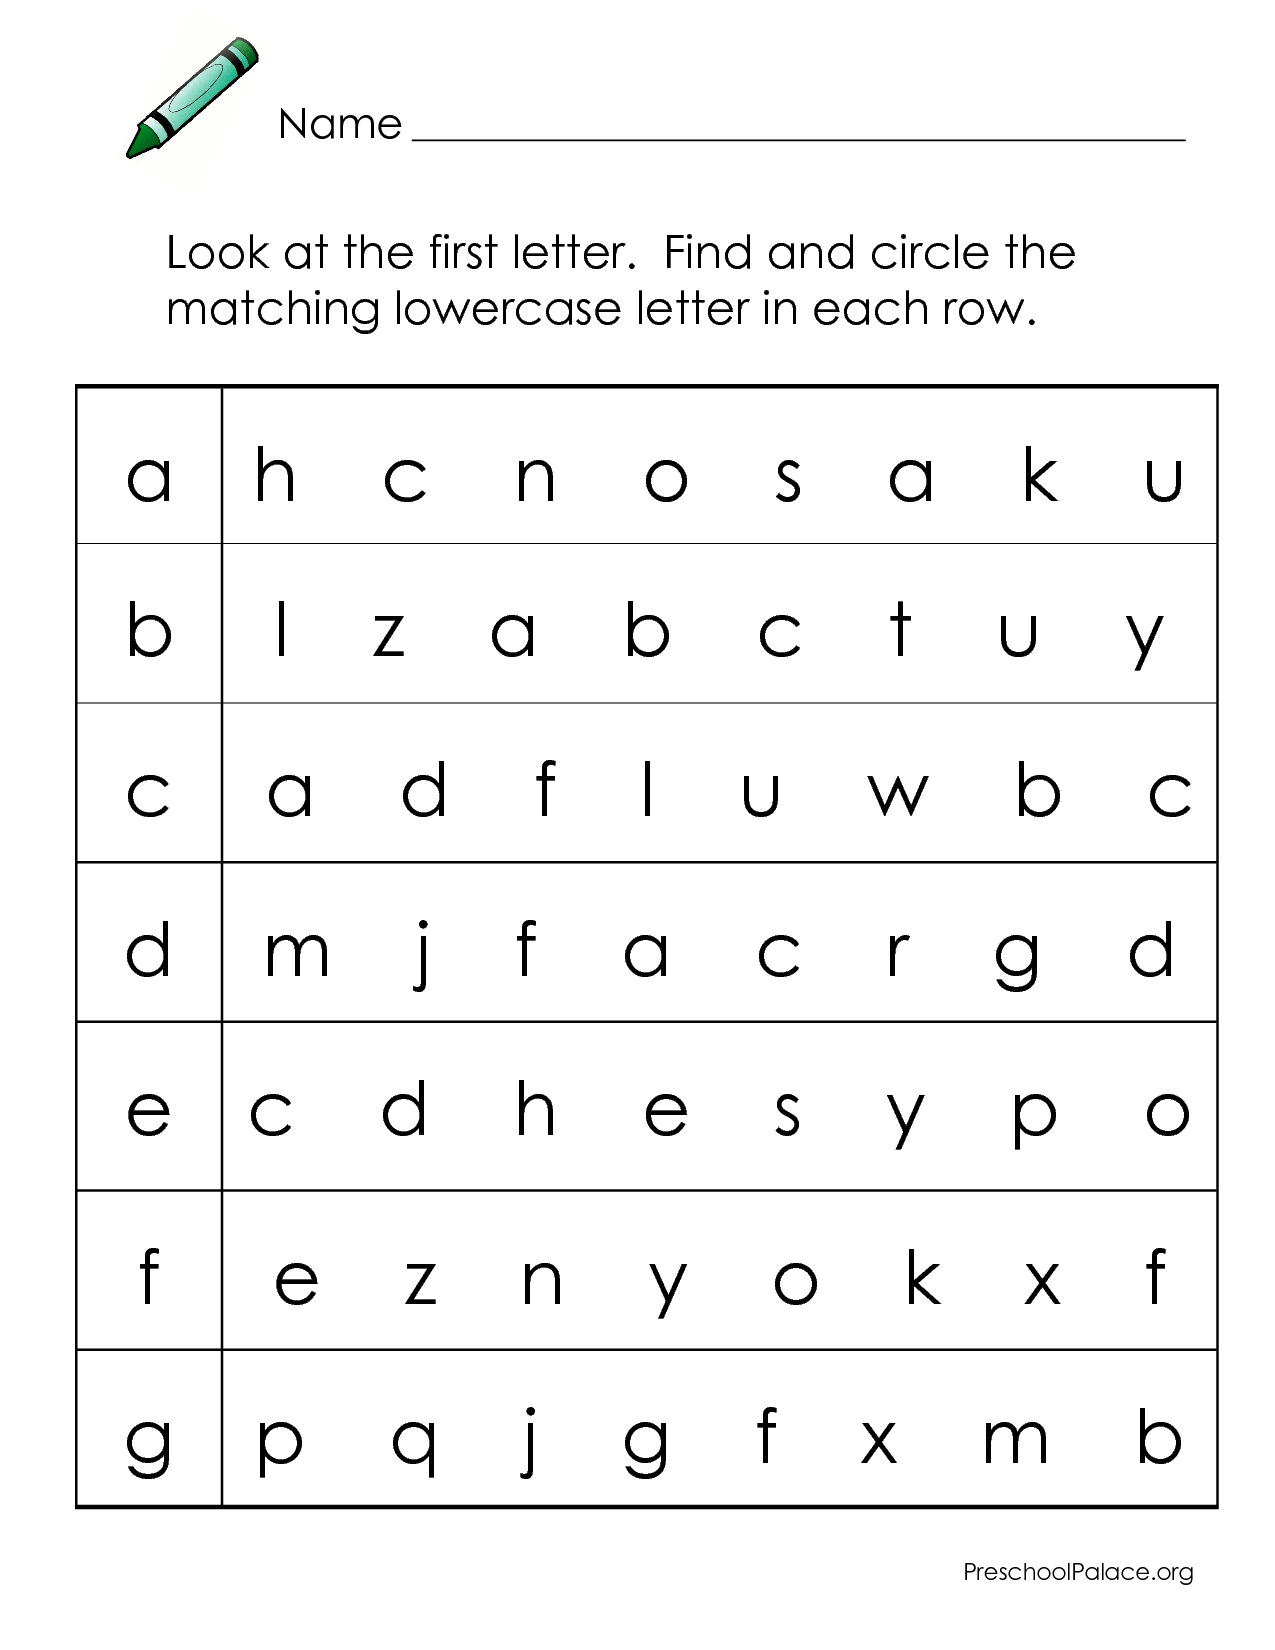 Alphabet Worksheets For Preschoolers | Abcs - Letter with Letter Matching Worksheets